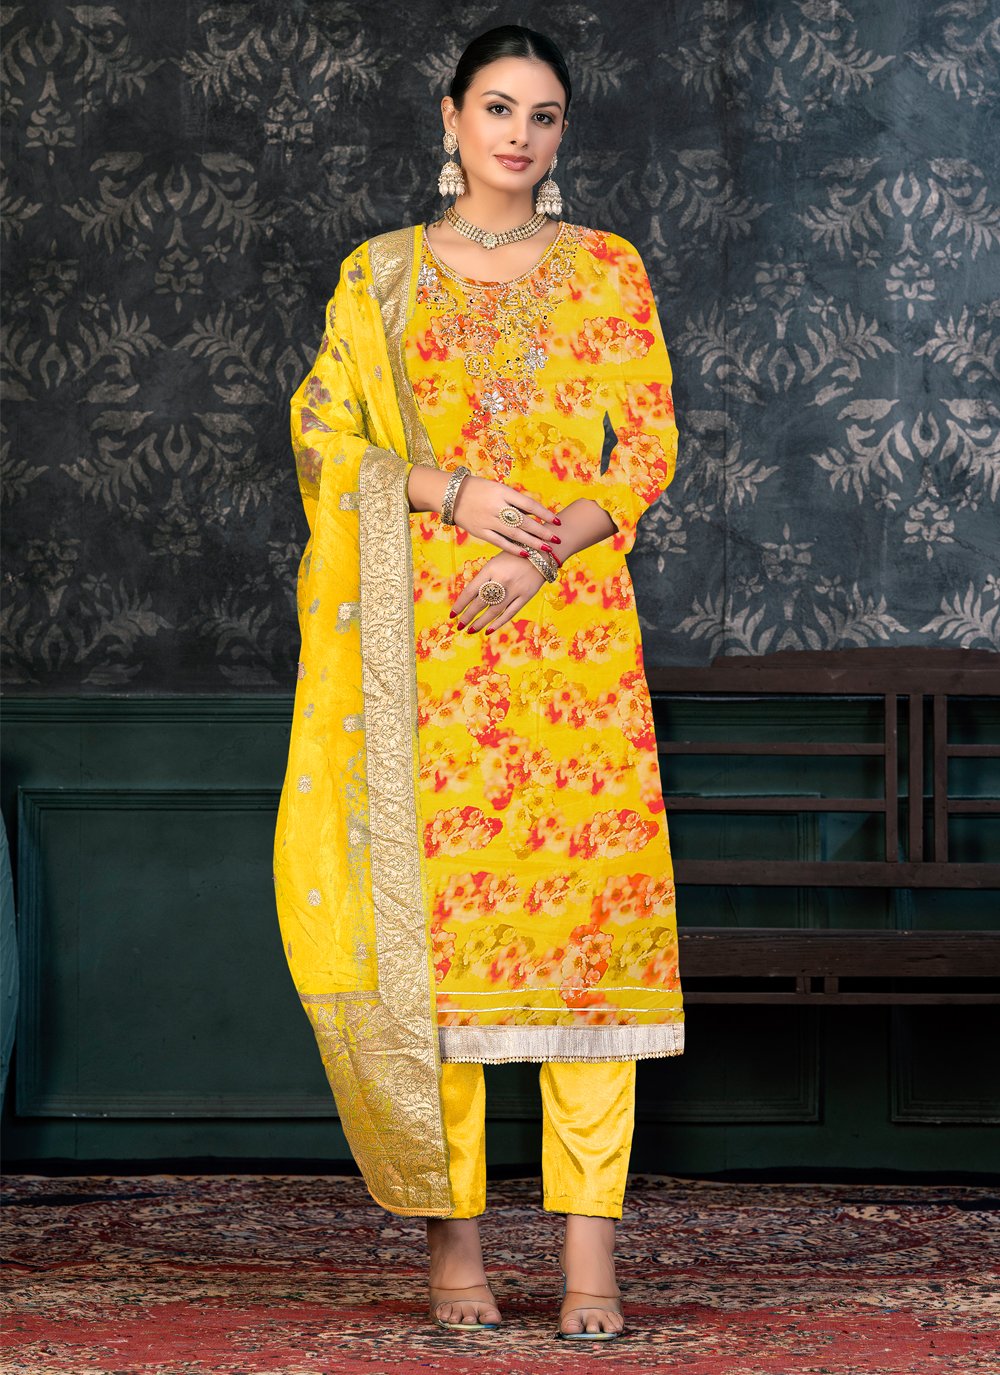 Punjabi Suit Photoshoot 💋💋 @renu_singla24 #renu_singla24 #punjabisuits # suit #suits #yellowsuit #yellowred #punjaban #jatti #suits... | Instagram